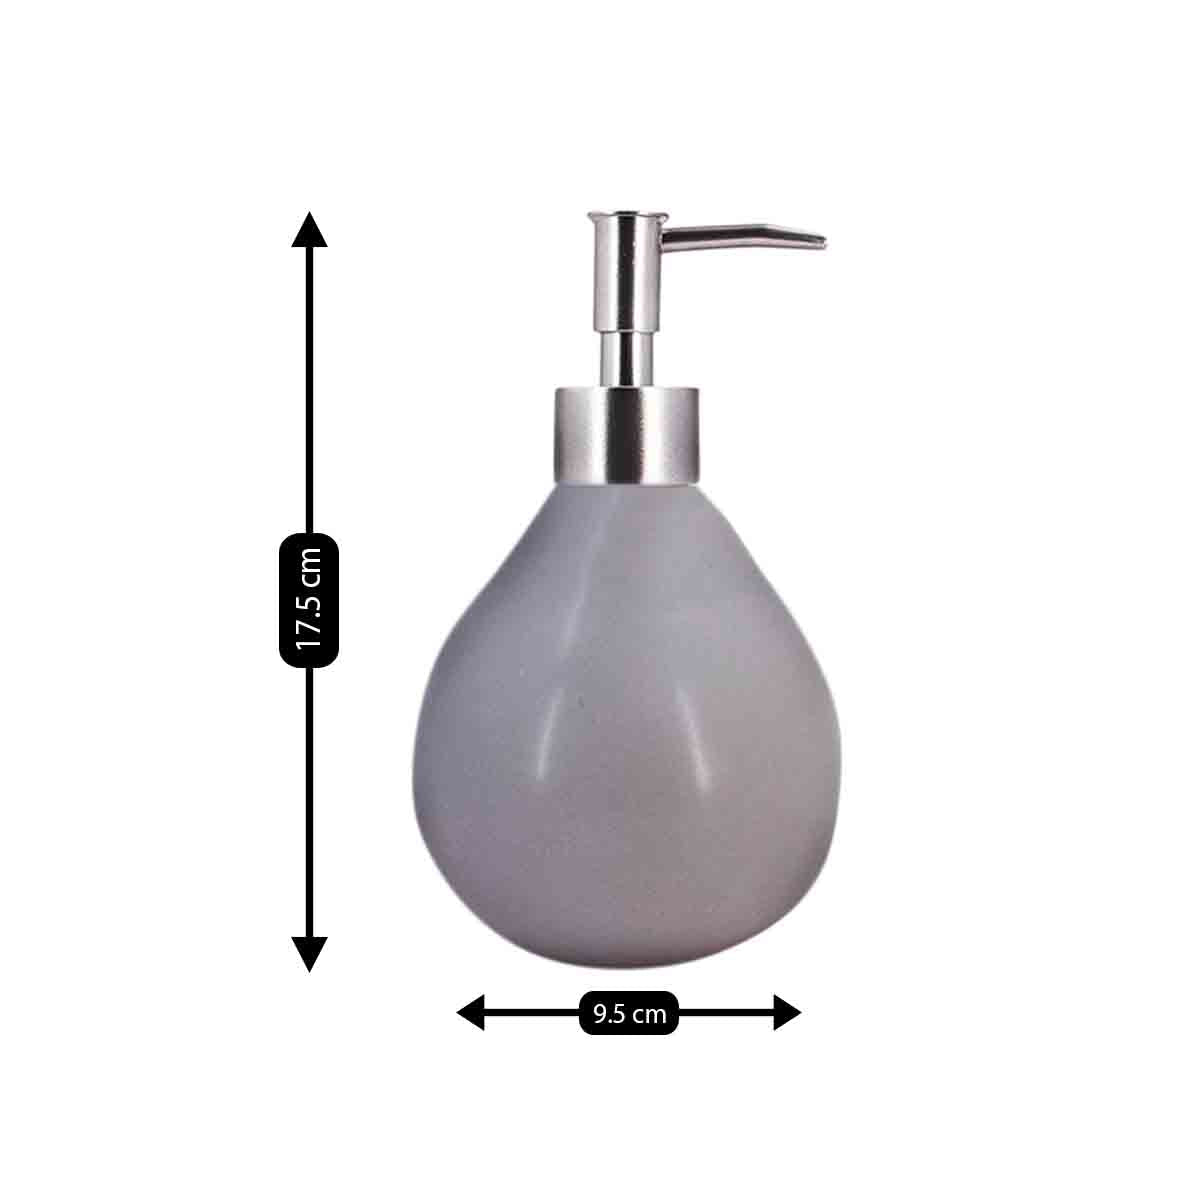 Ceramic Soap Dispenser Pump for Bathroom for Bath Gel, Lotion, Shampoo (8015)